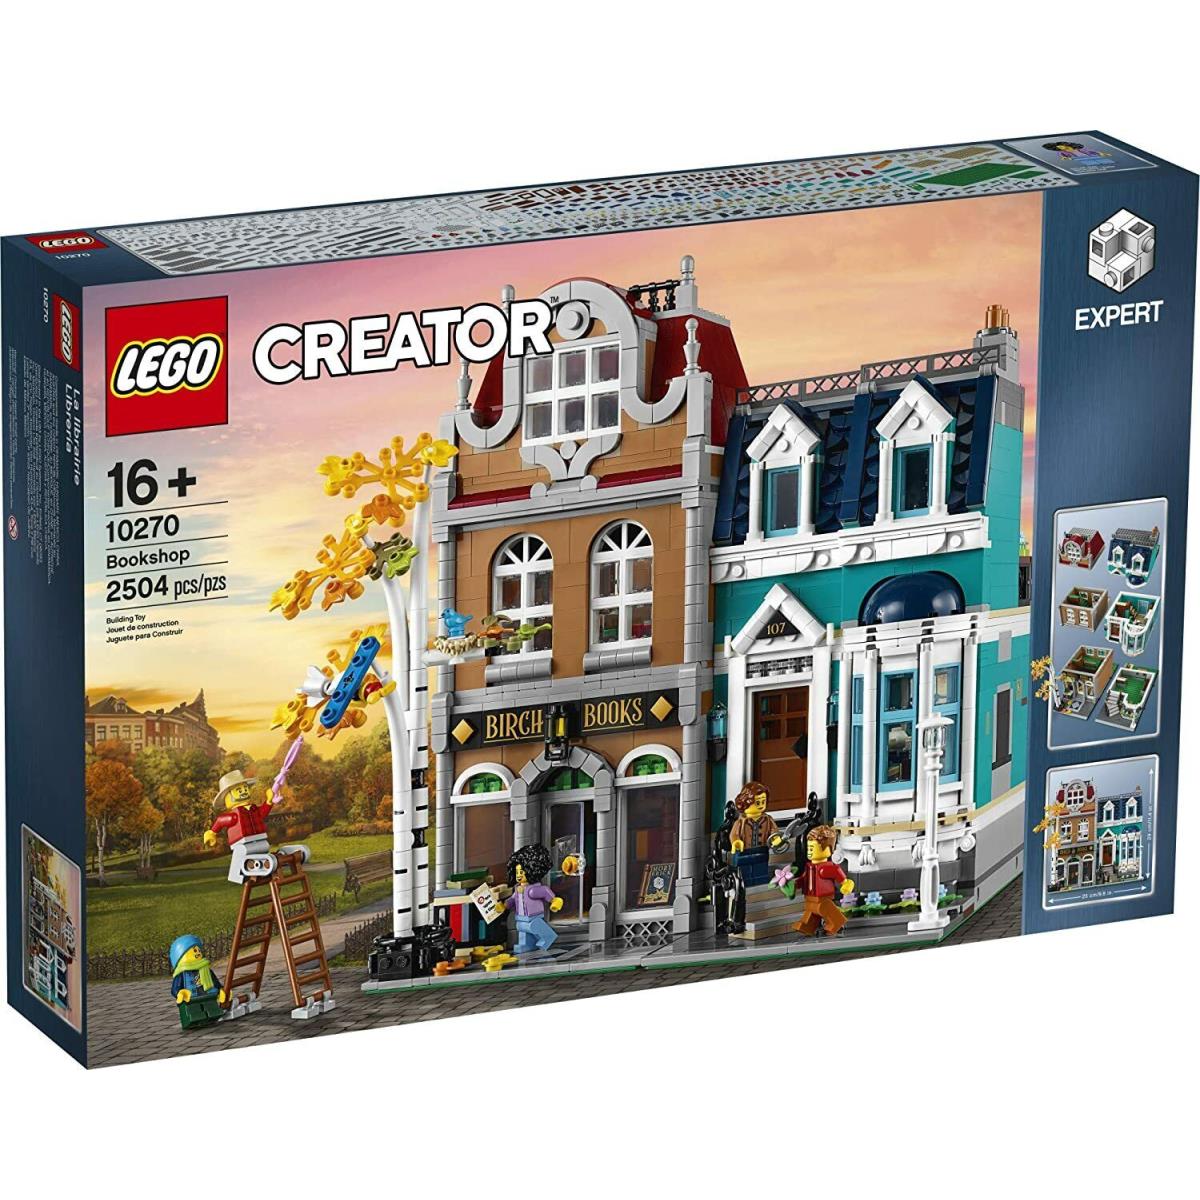 Lego Creator Expert Bookshop 10270 Building Kit 2504 Pieces